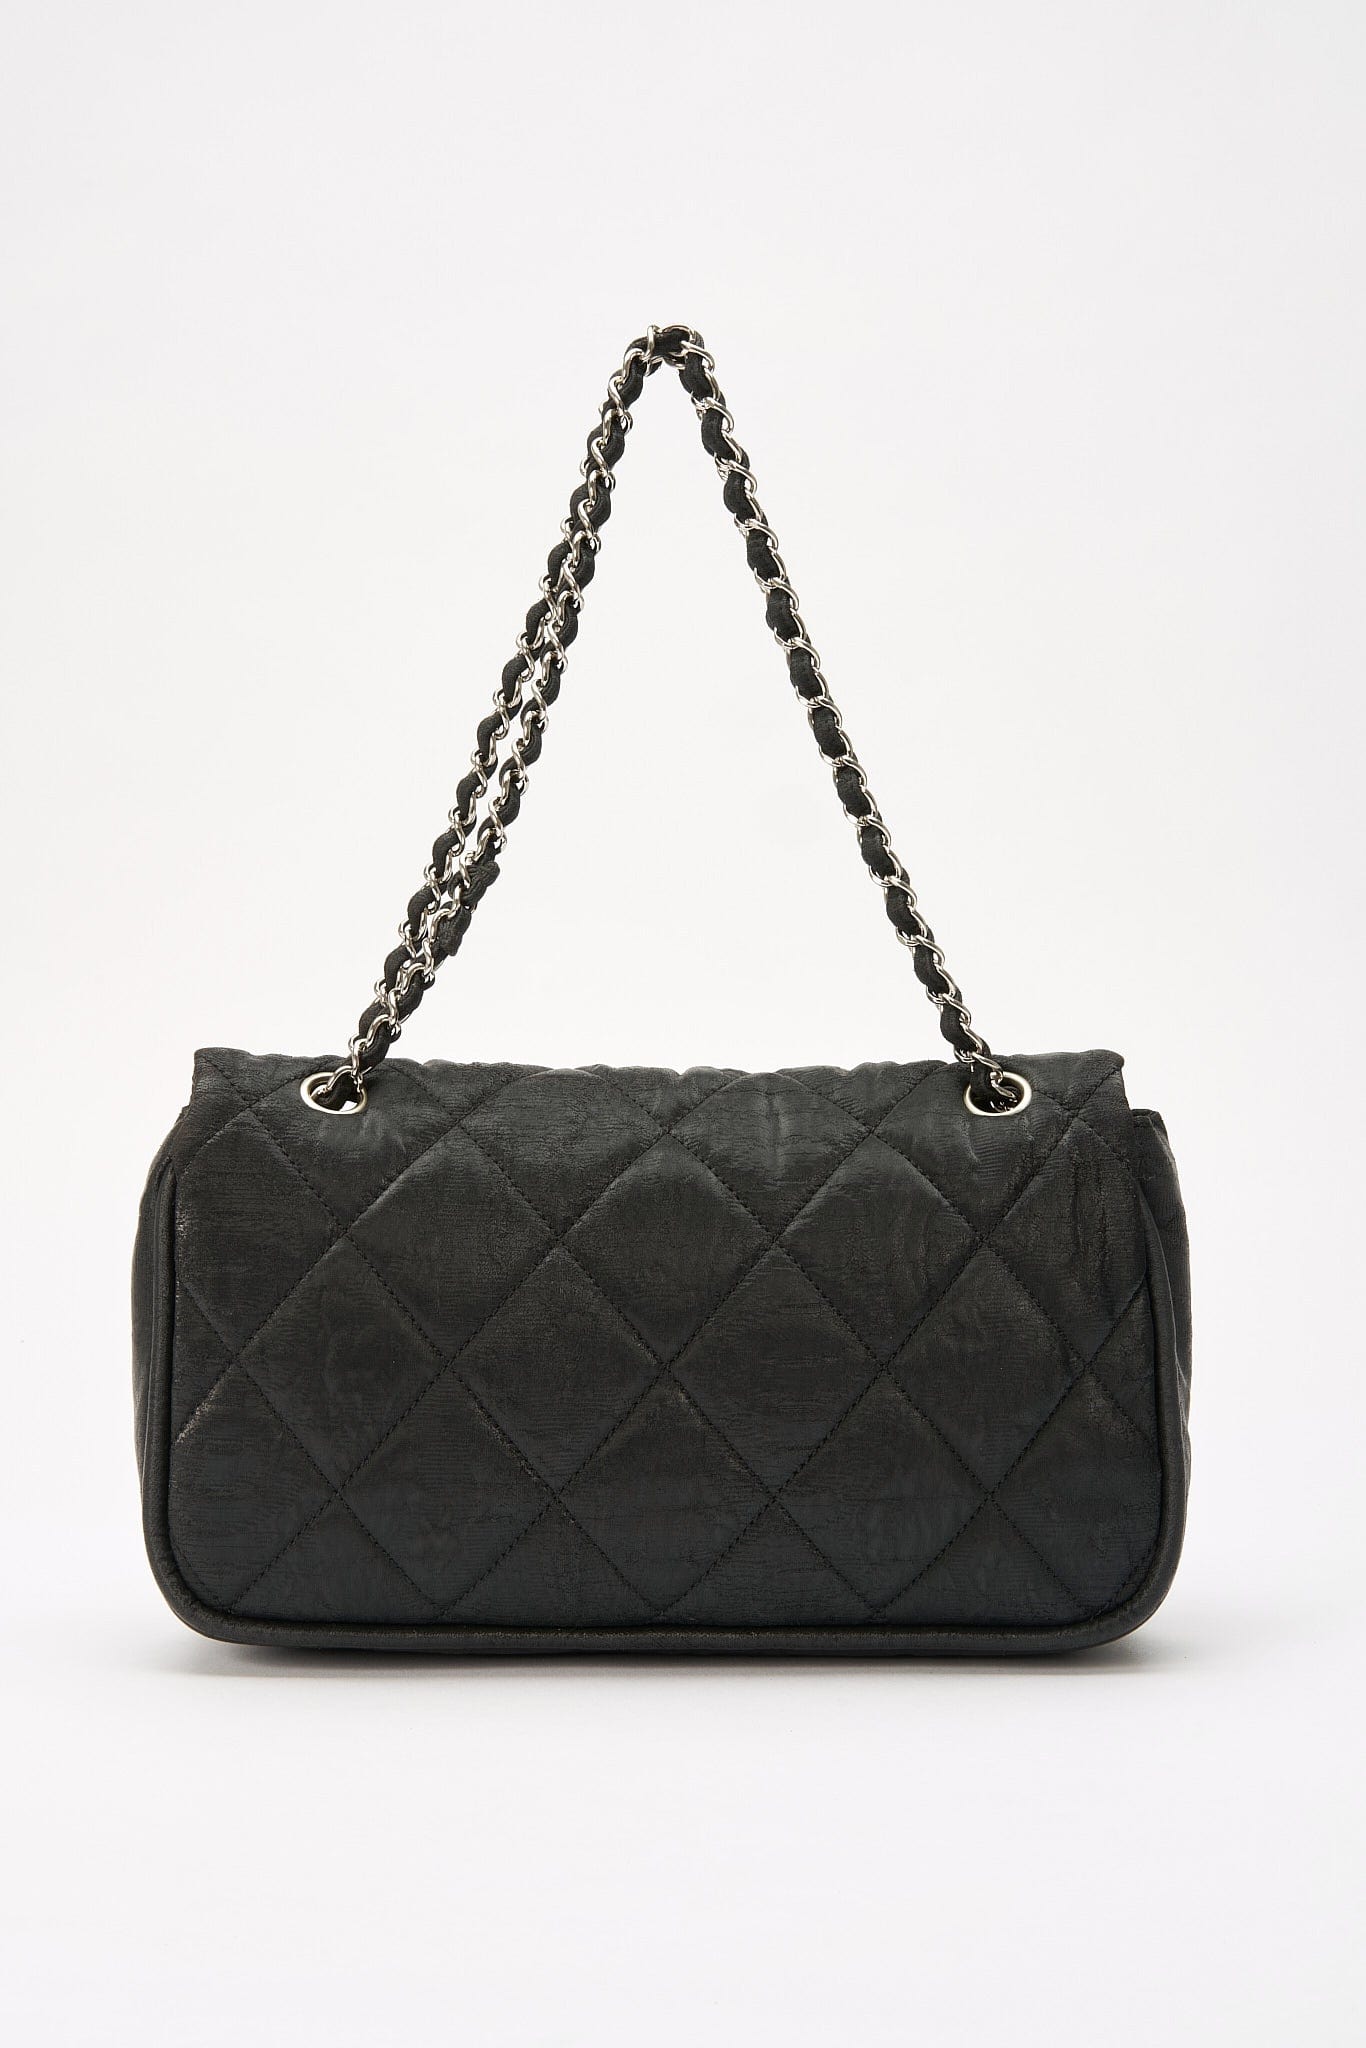 Chanel Black Textured Coated Nylon Single Flap Bag - Black – The Hosta